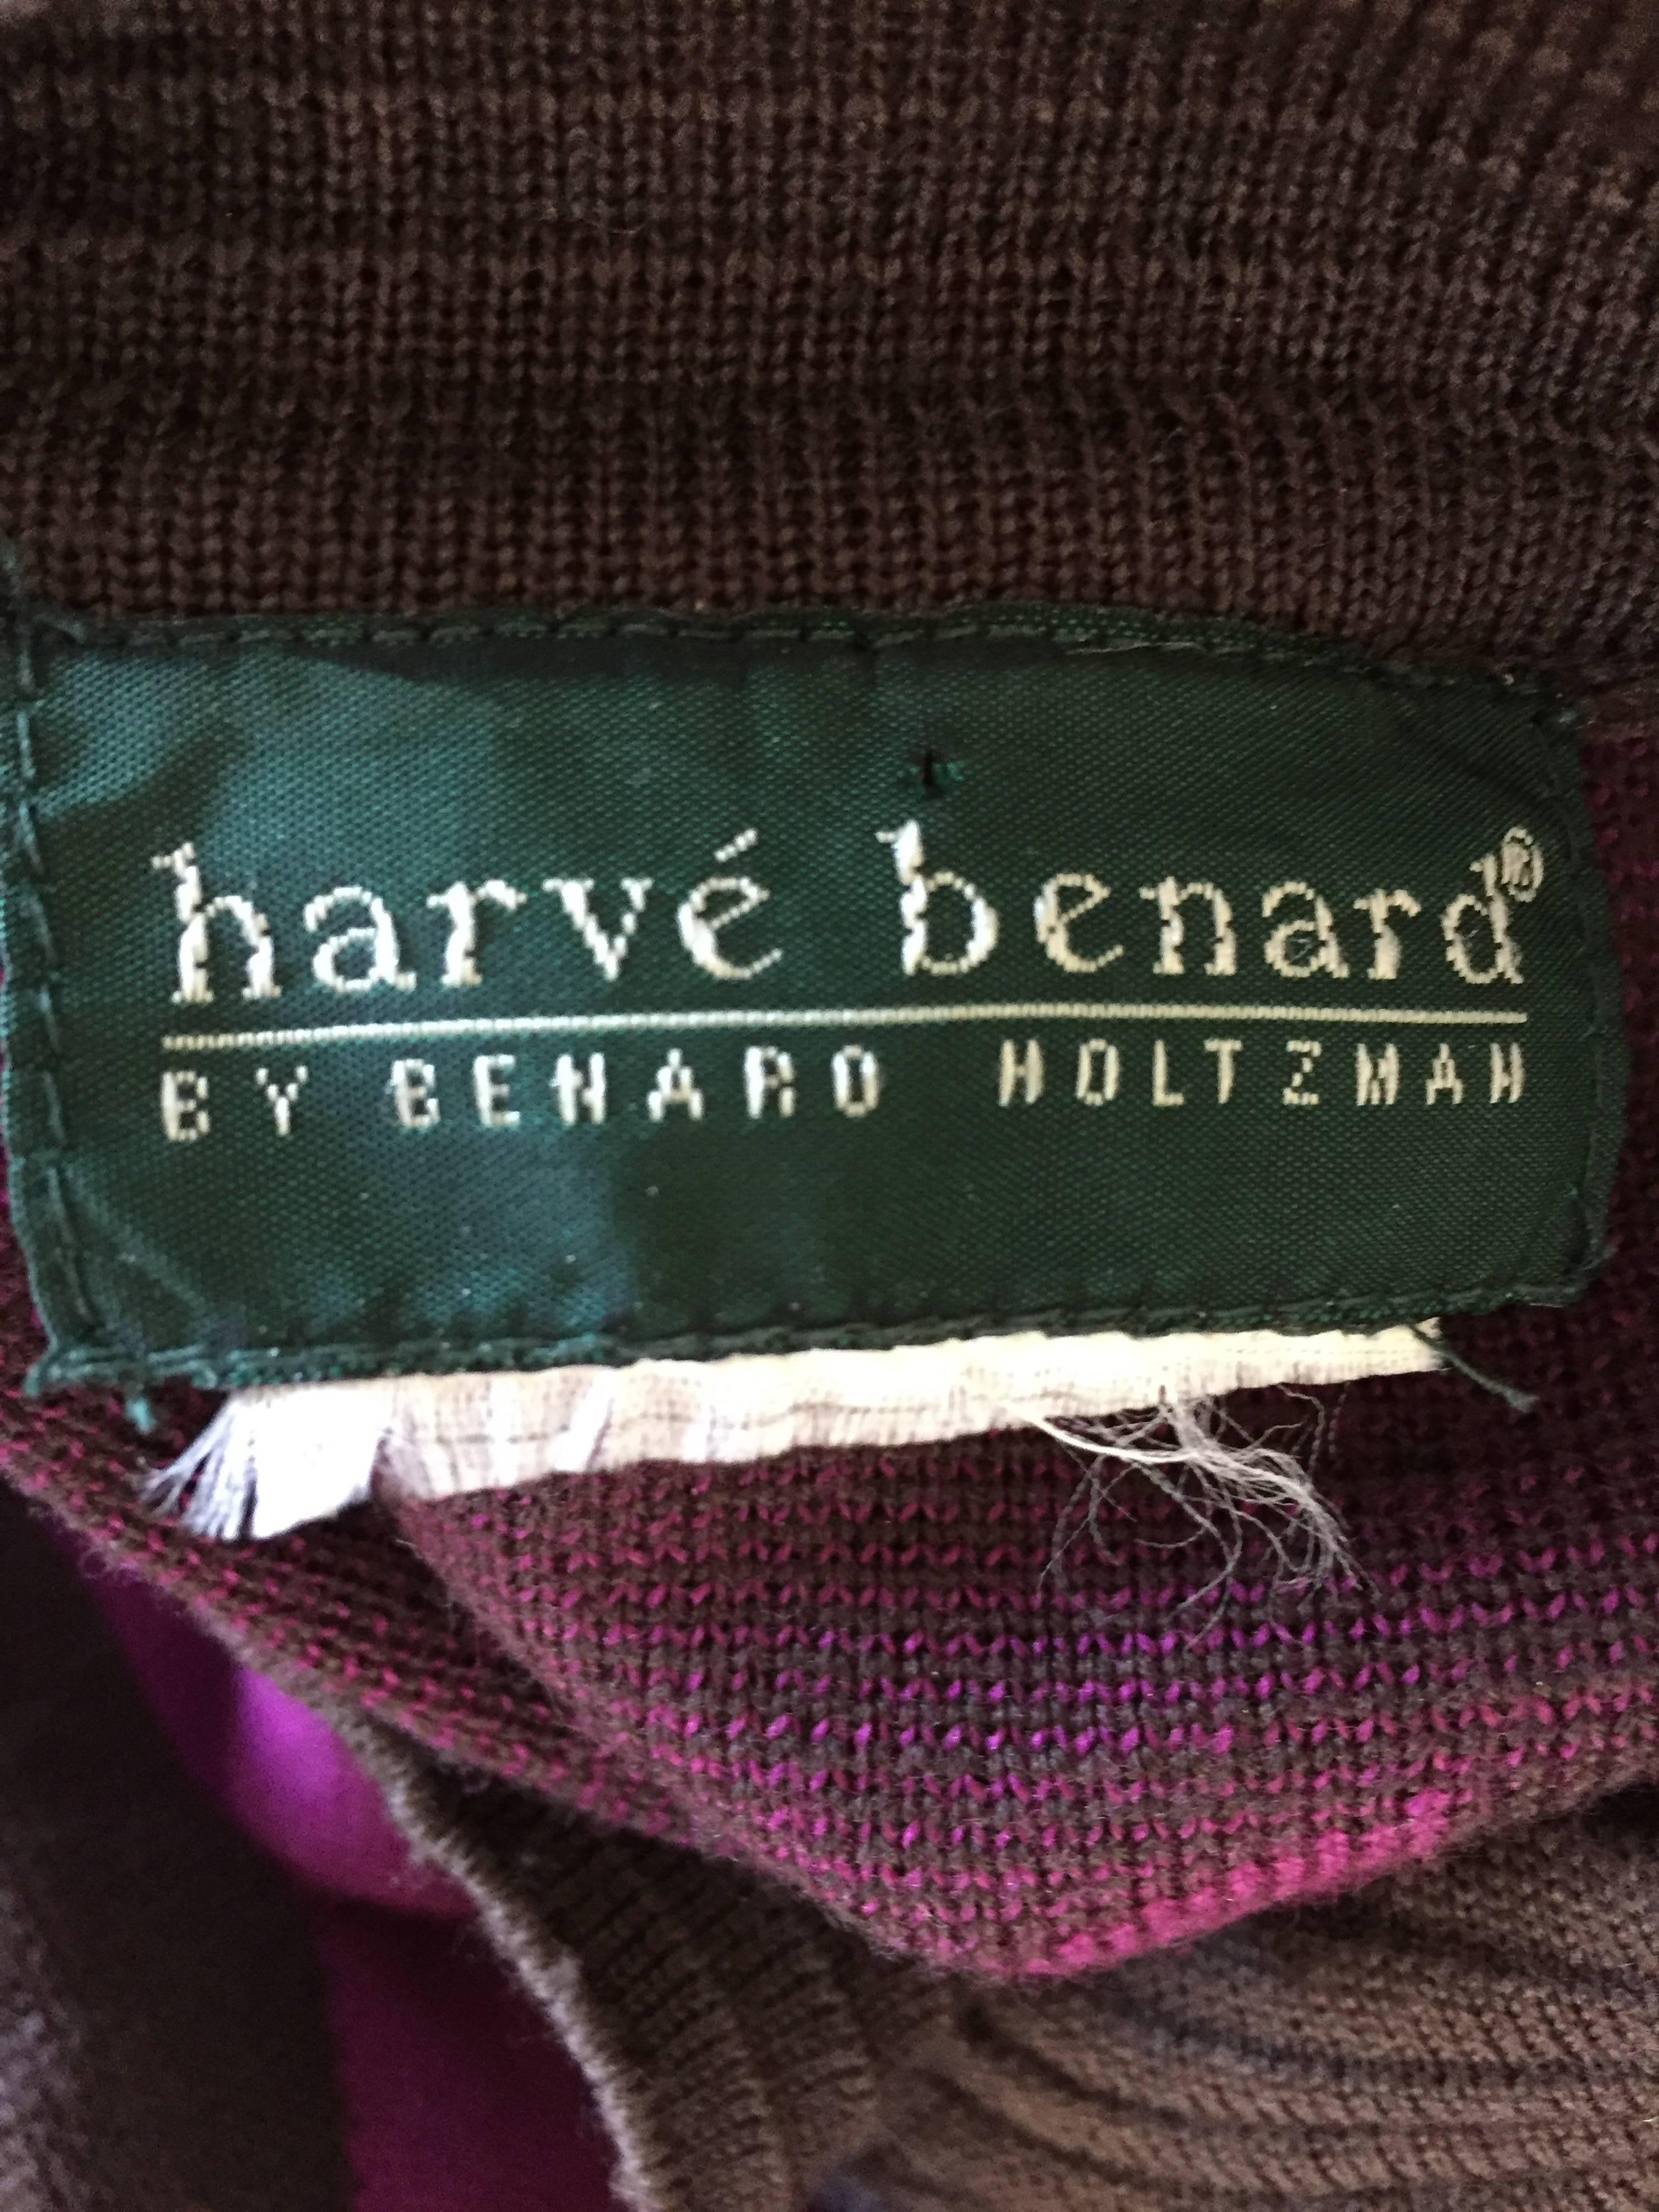 Vintage Benard Holtzmah for Harve Benard Fuchsia Brown Swiggle Cardigan Sweater For Sale 2